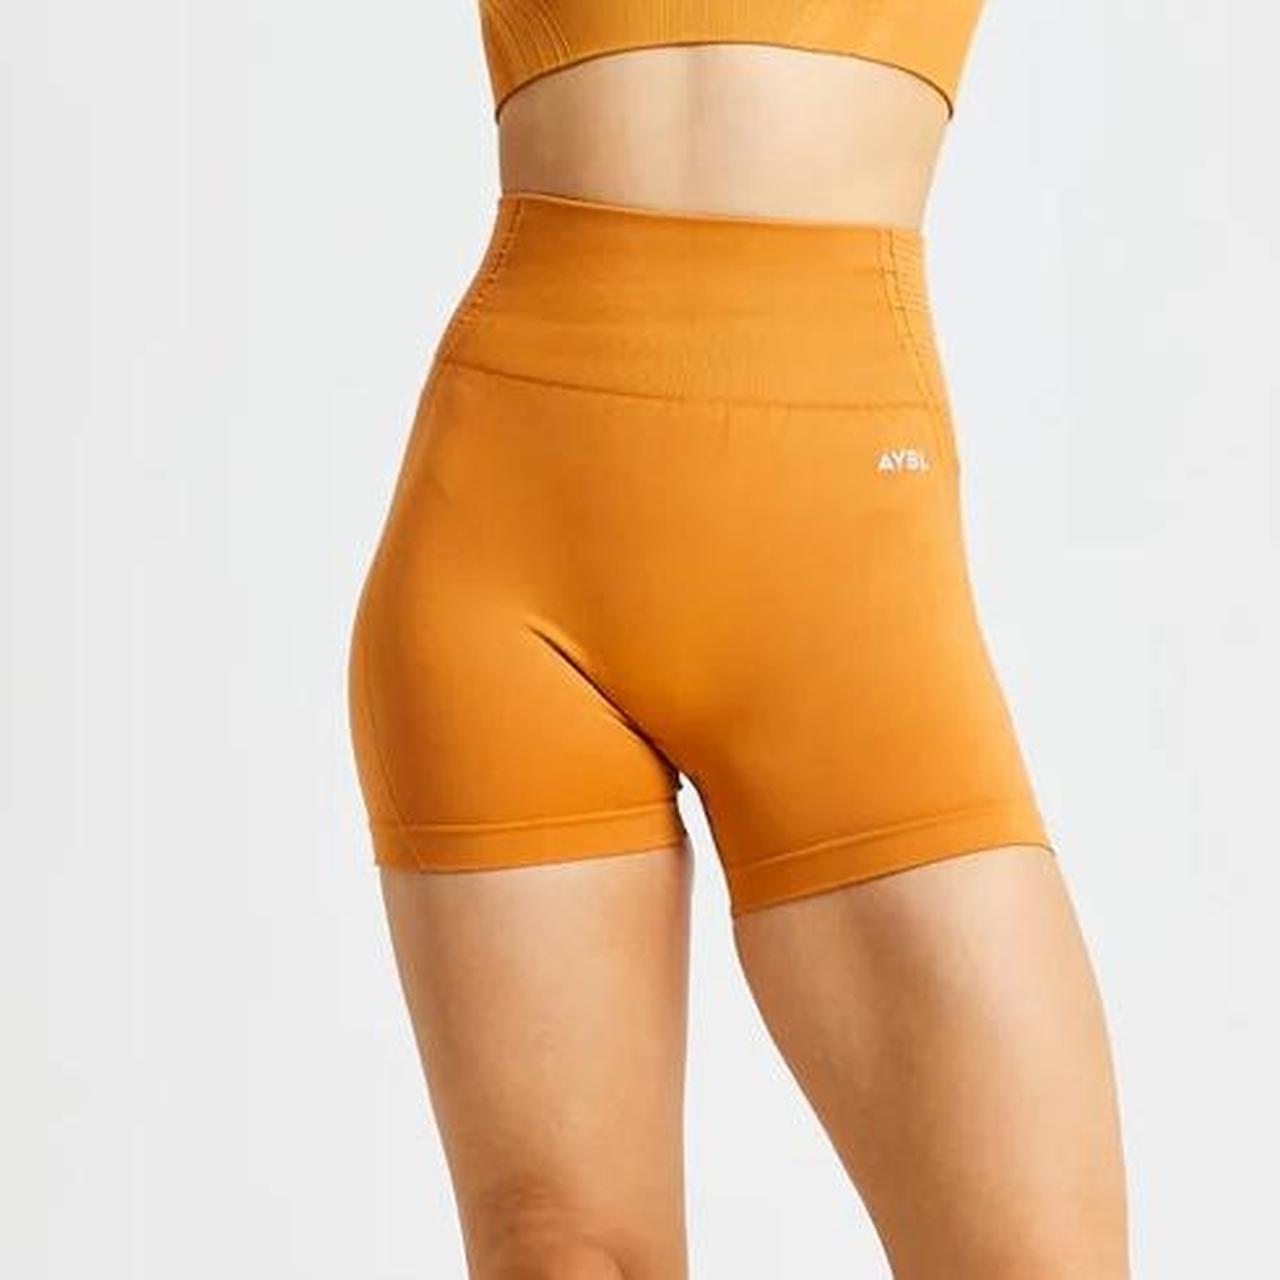 AYBL Balance v2 gym shorts in orange Worn once - Depop